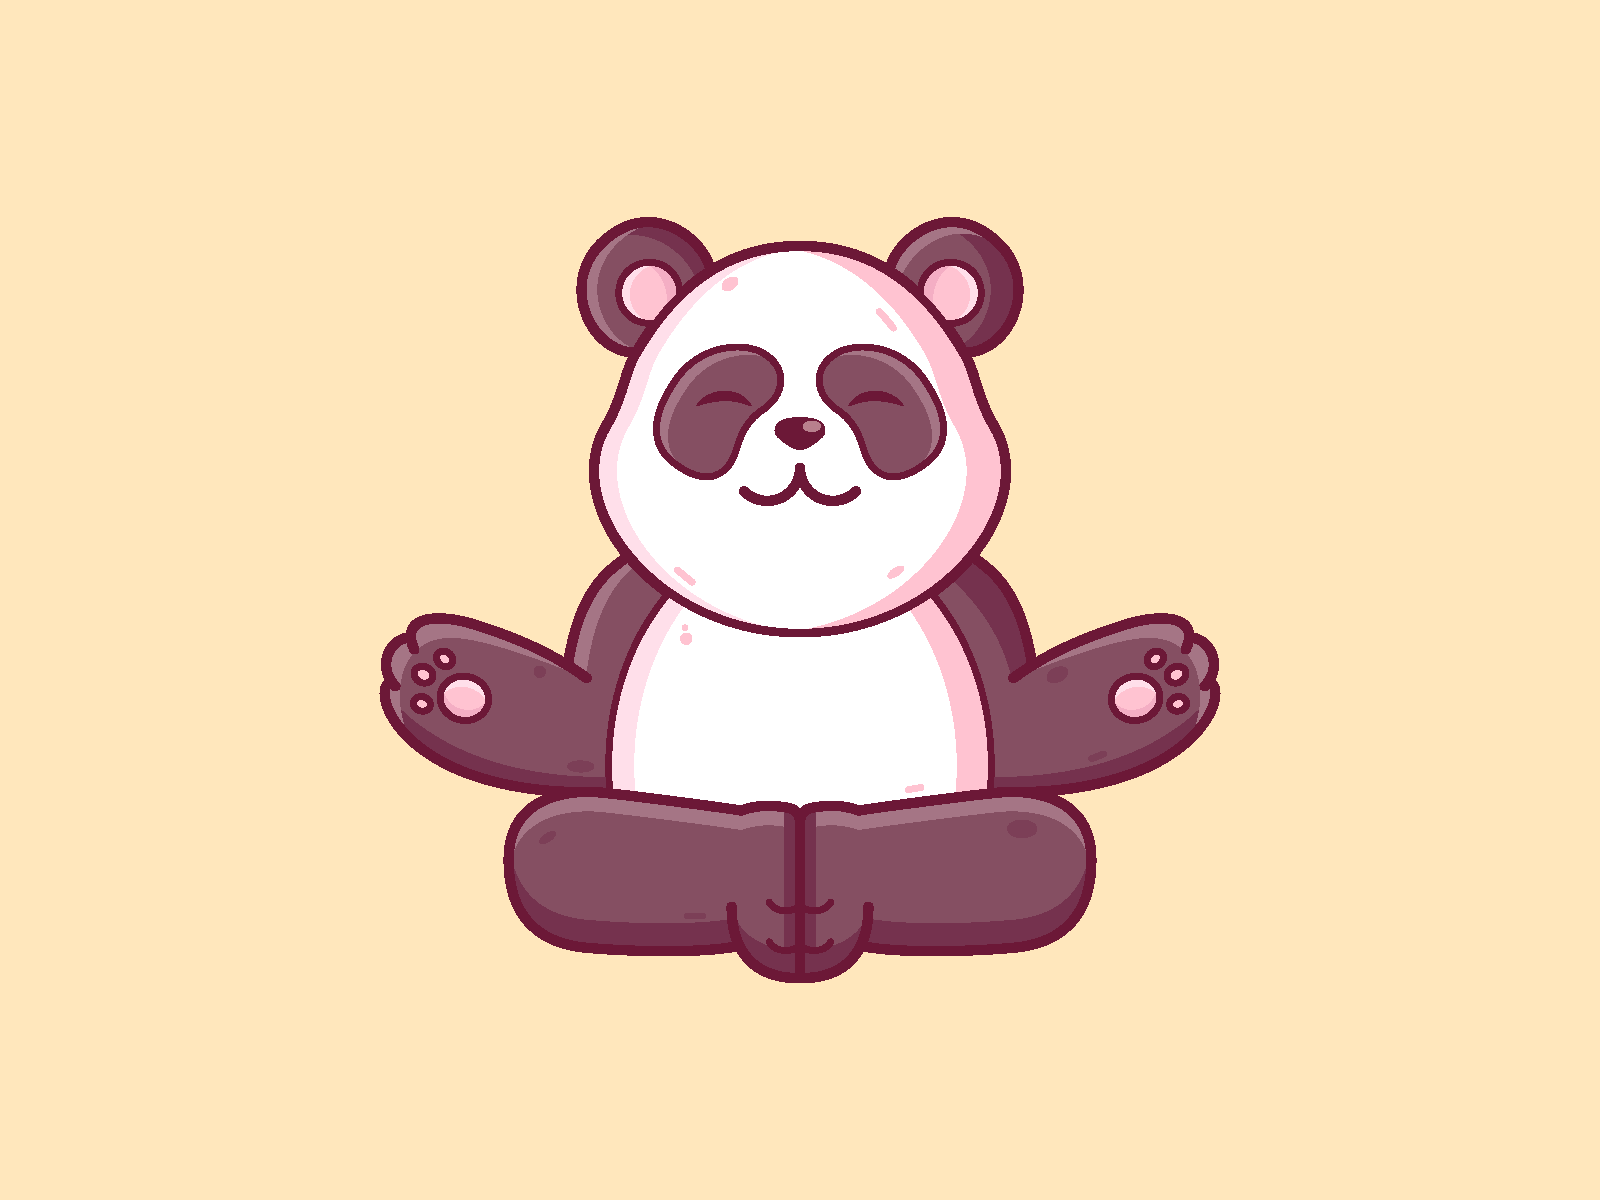 Panda Meditation by Ardhsells on Dribbble